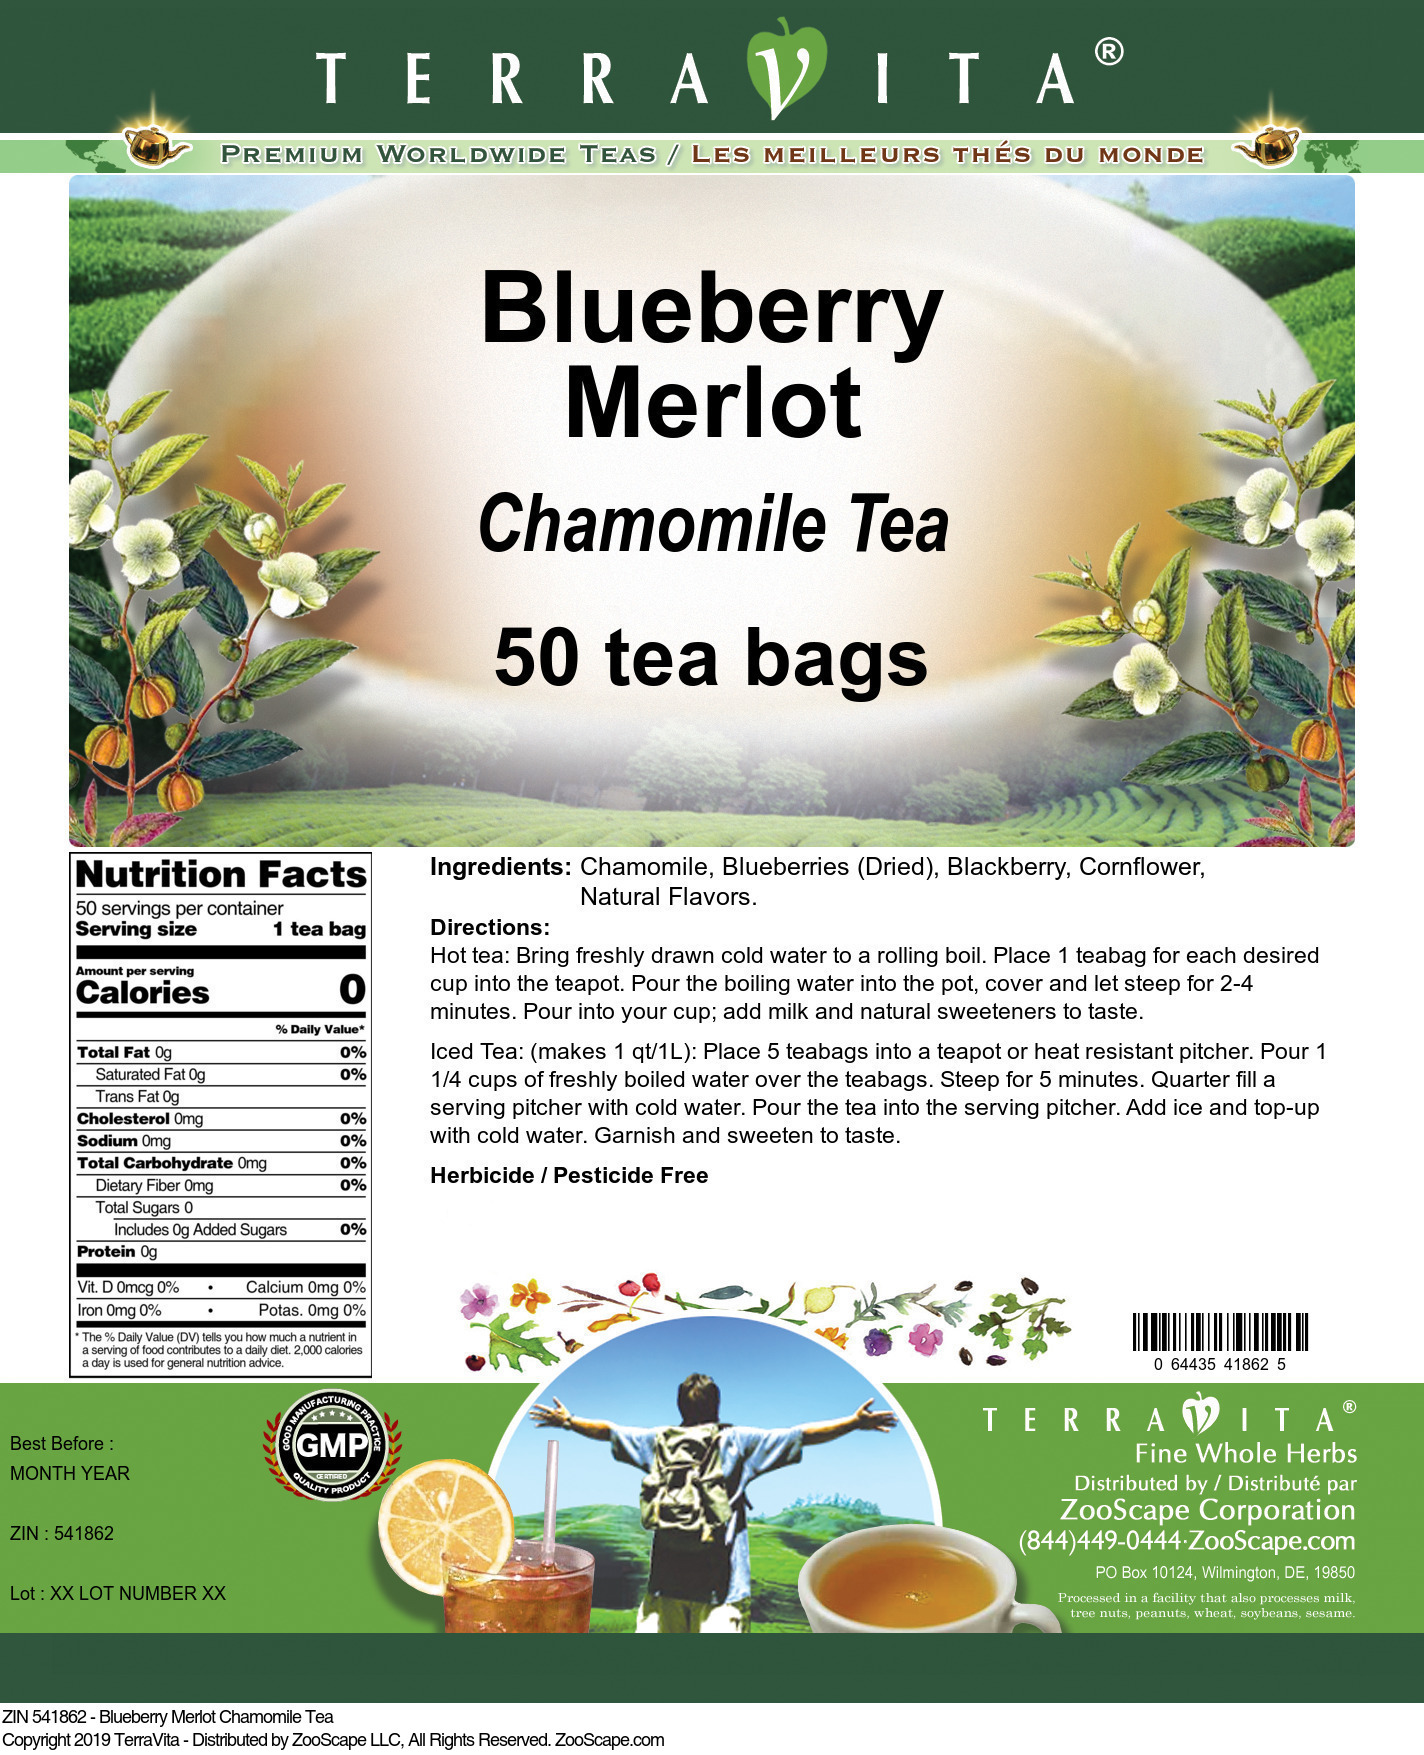 Blueberry Merlot Chamomile Tea - Label